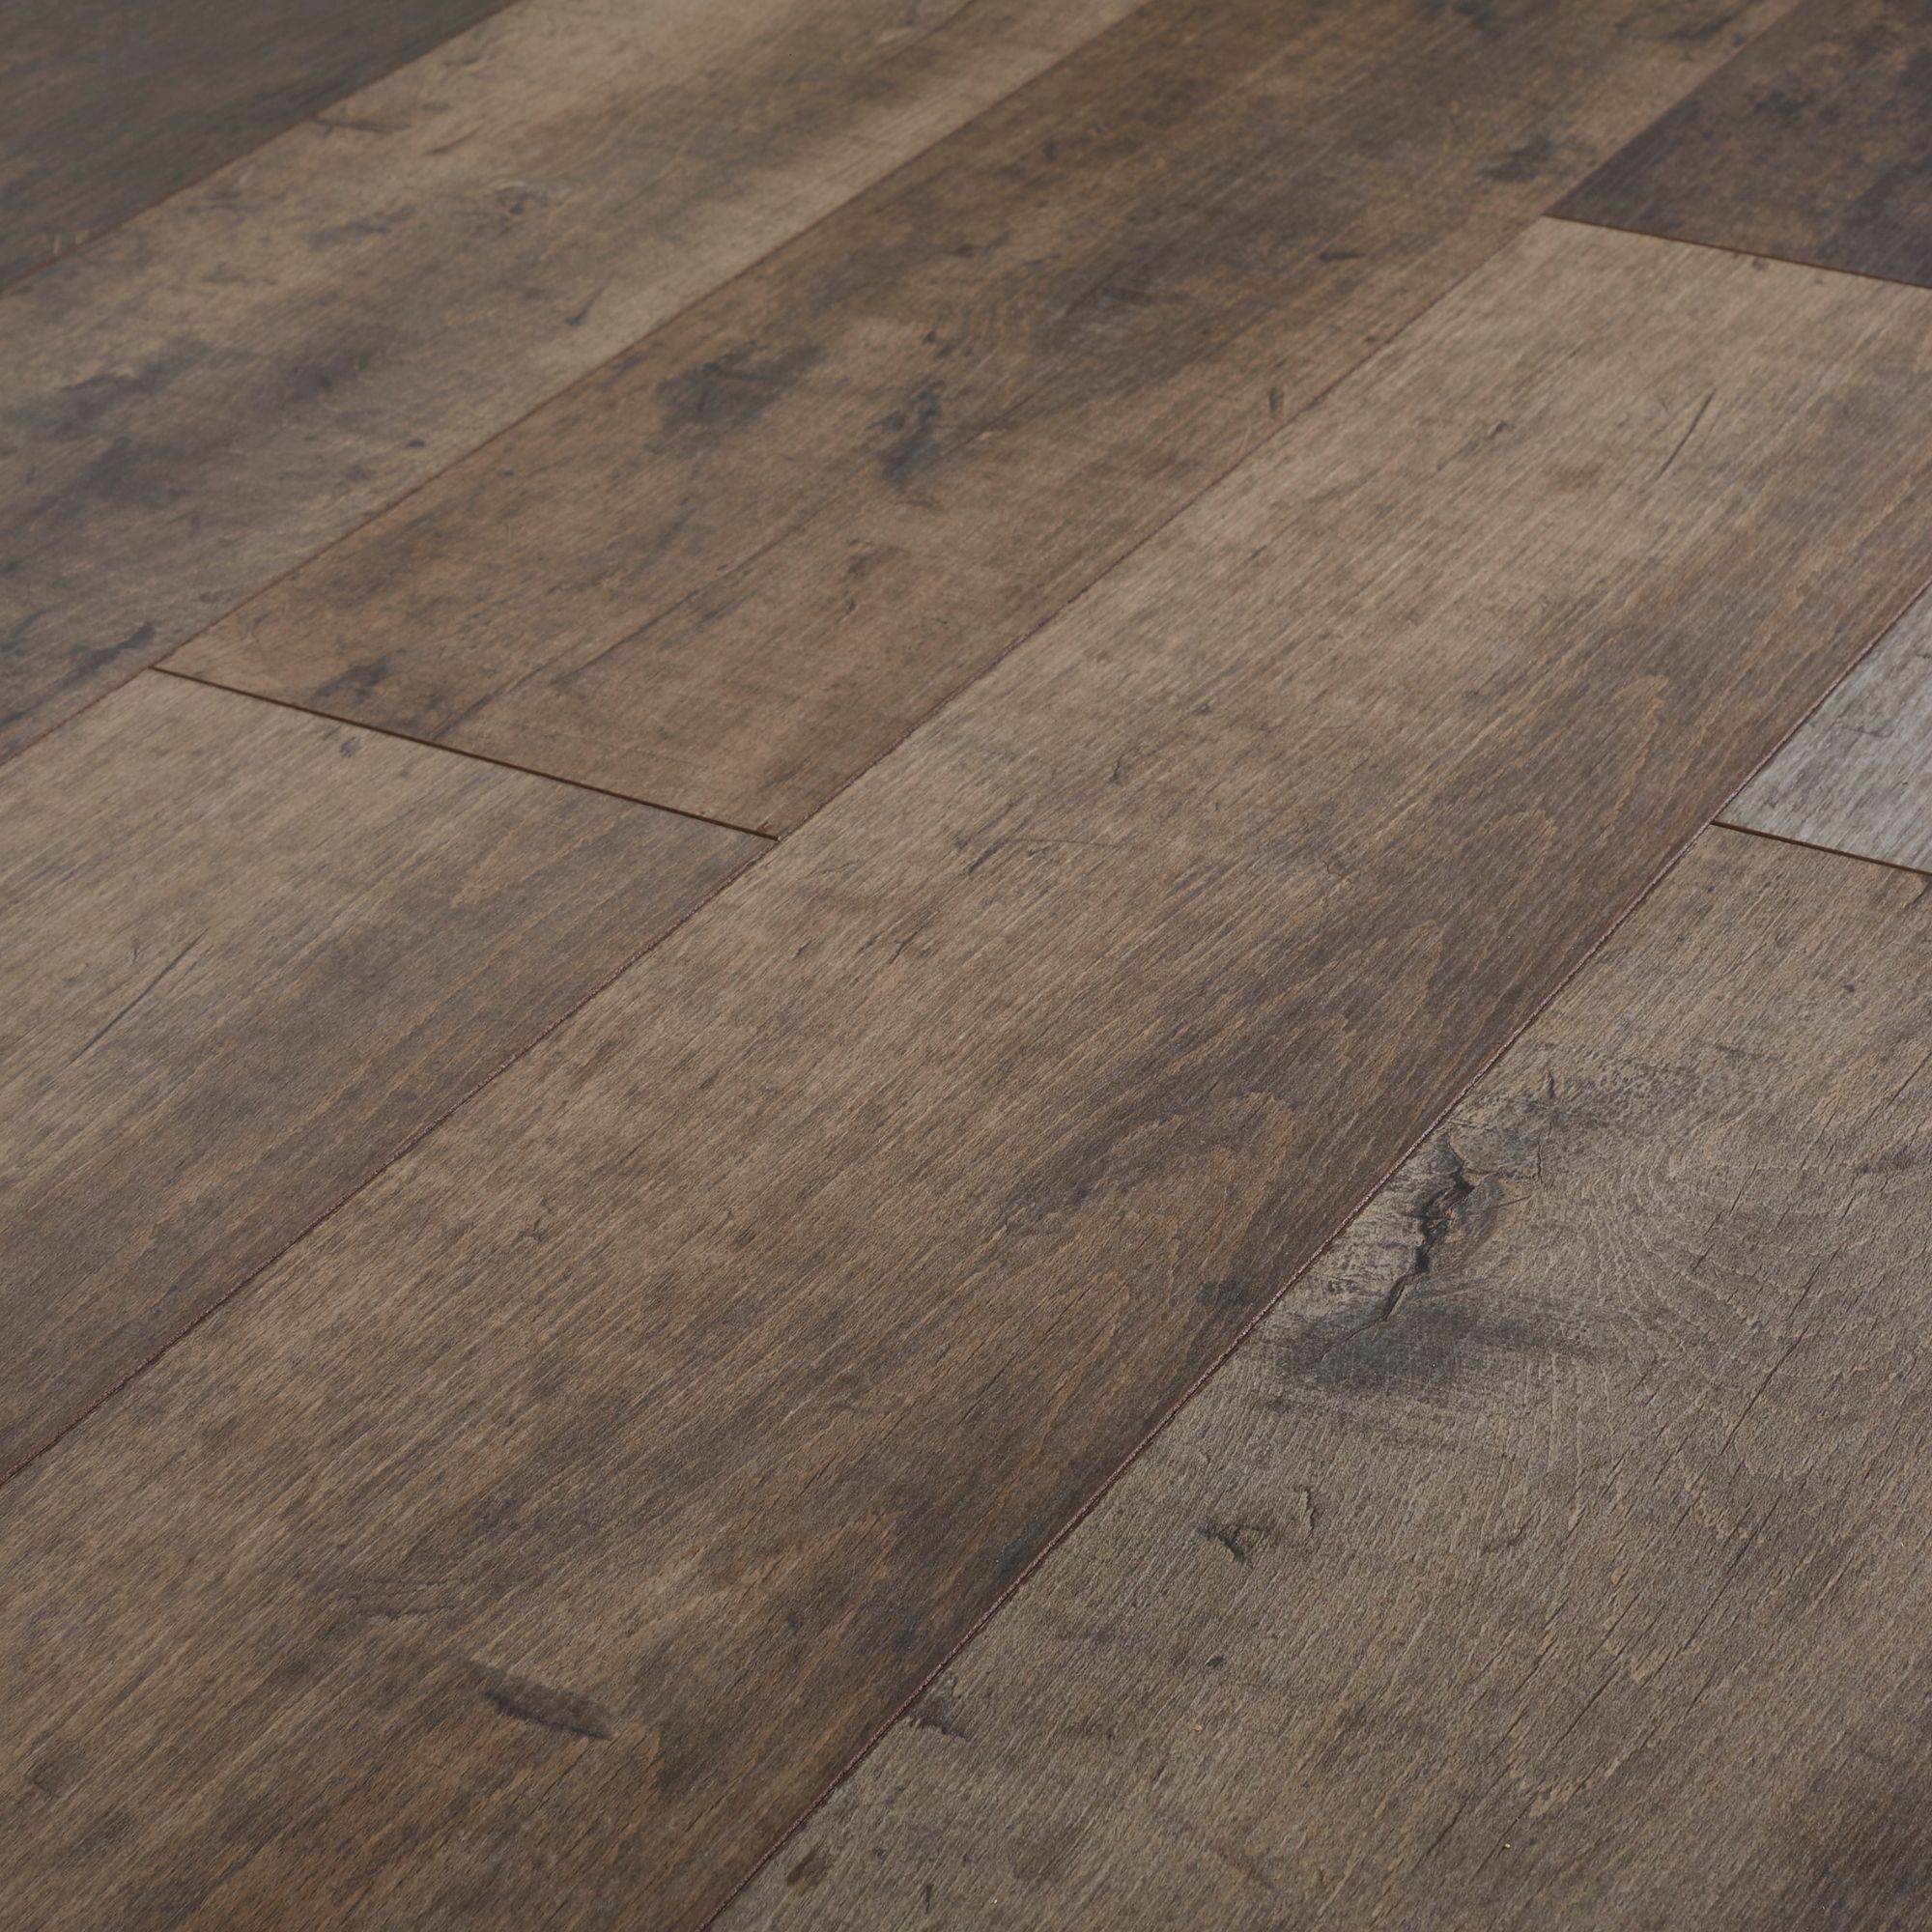 Goodhome Kirton Natural Oak Effect Laminate Flooring 2 13m Pack